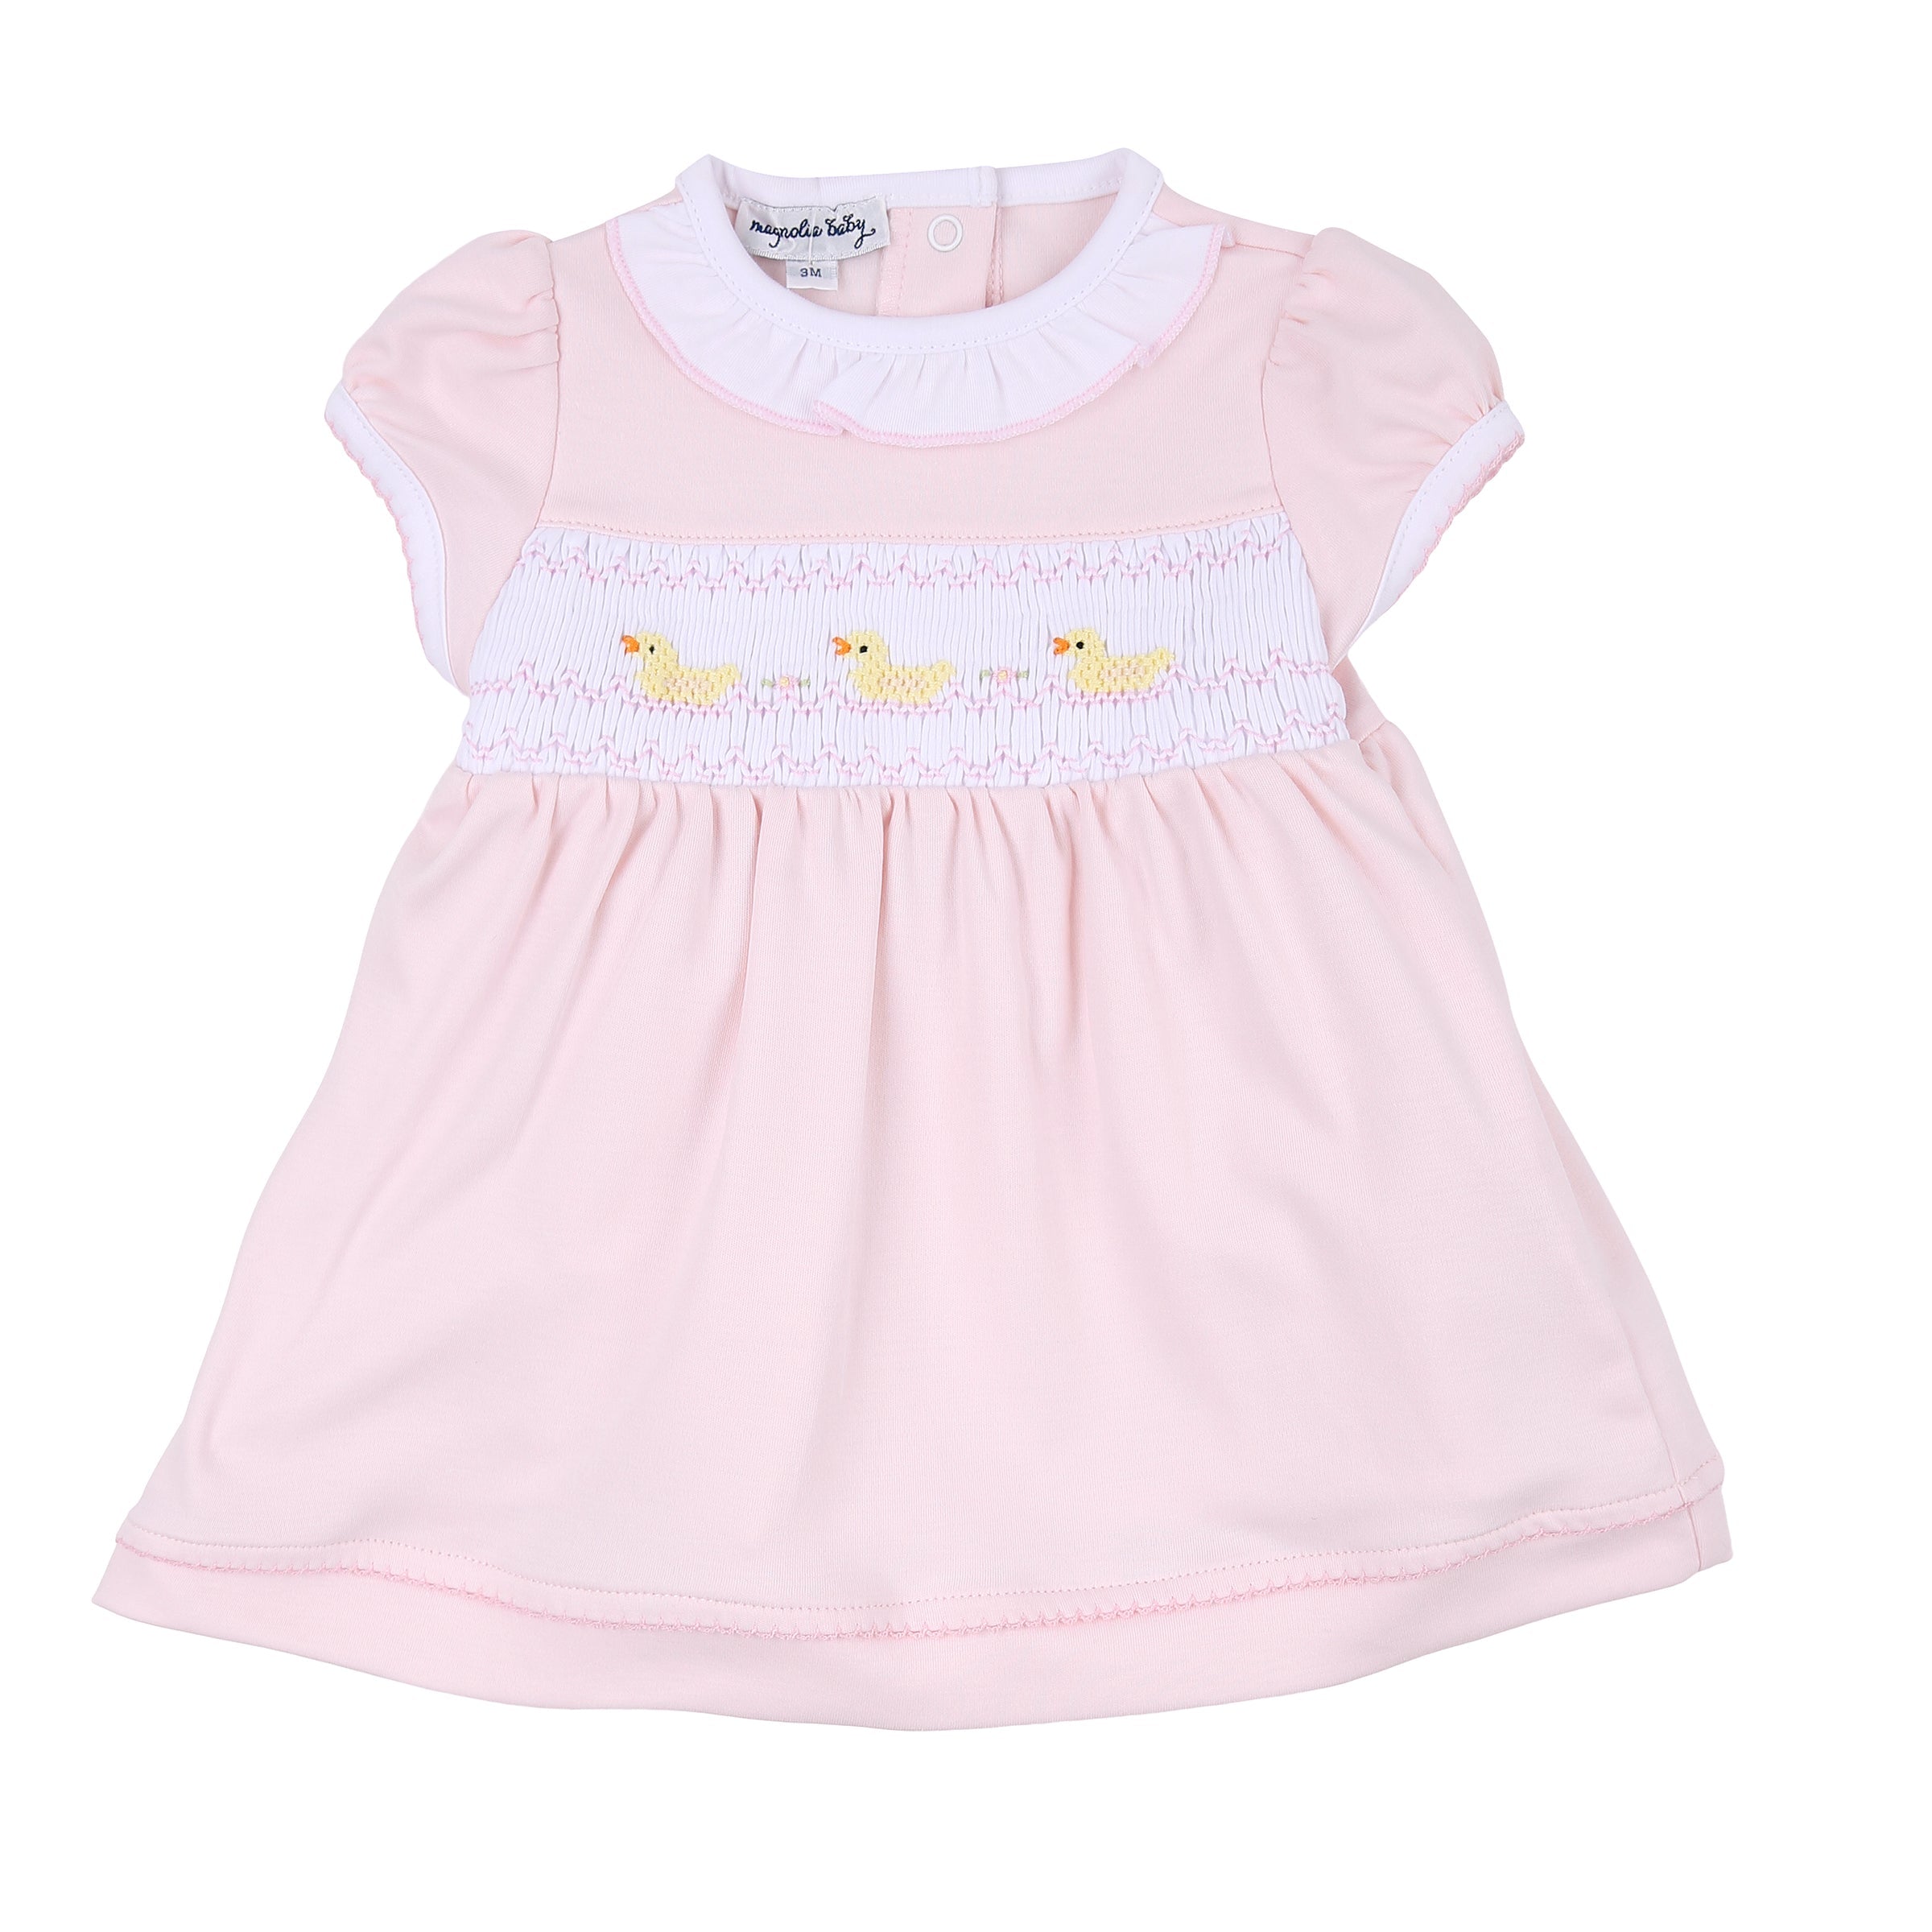 Just Ducky Classics Smocked Short Sleeve Toddler Dress